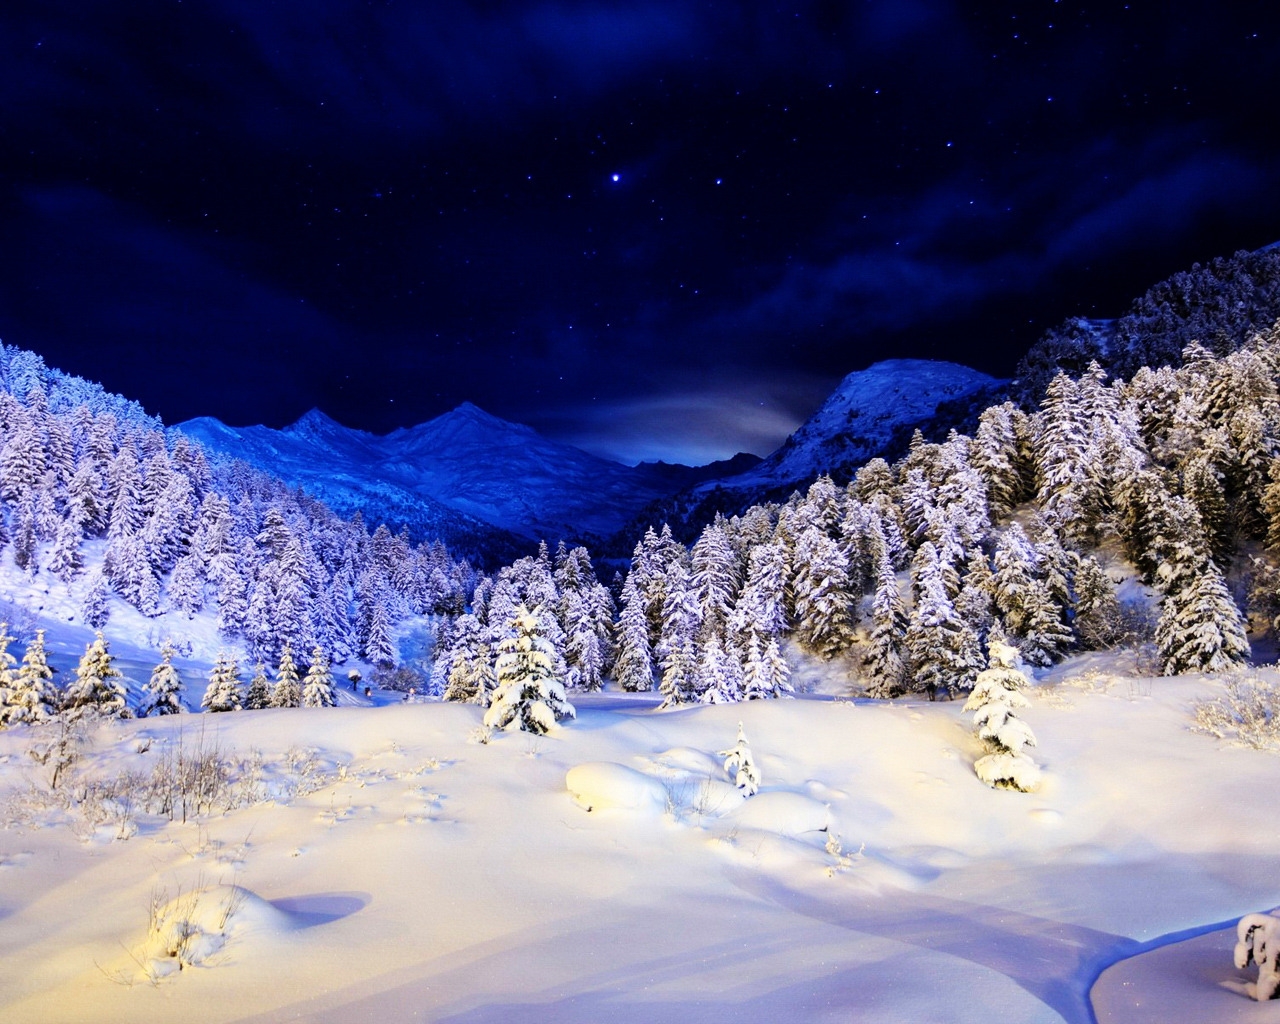 Blue Winter Night for 1280 x 1024 resolution